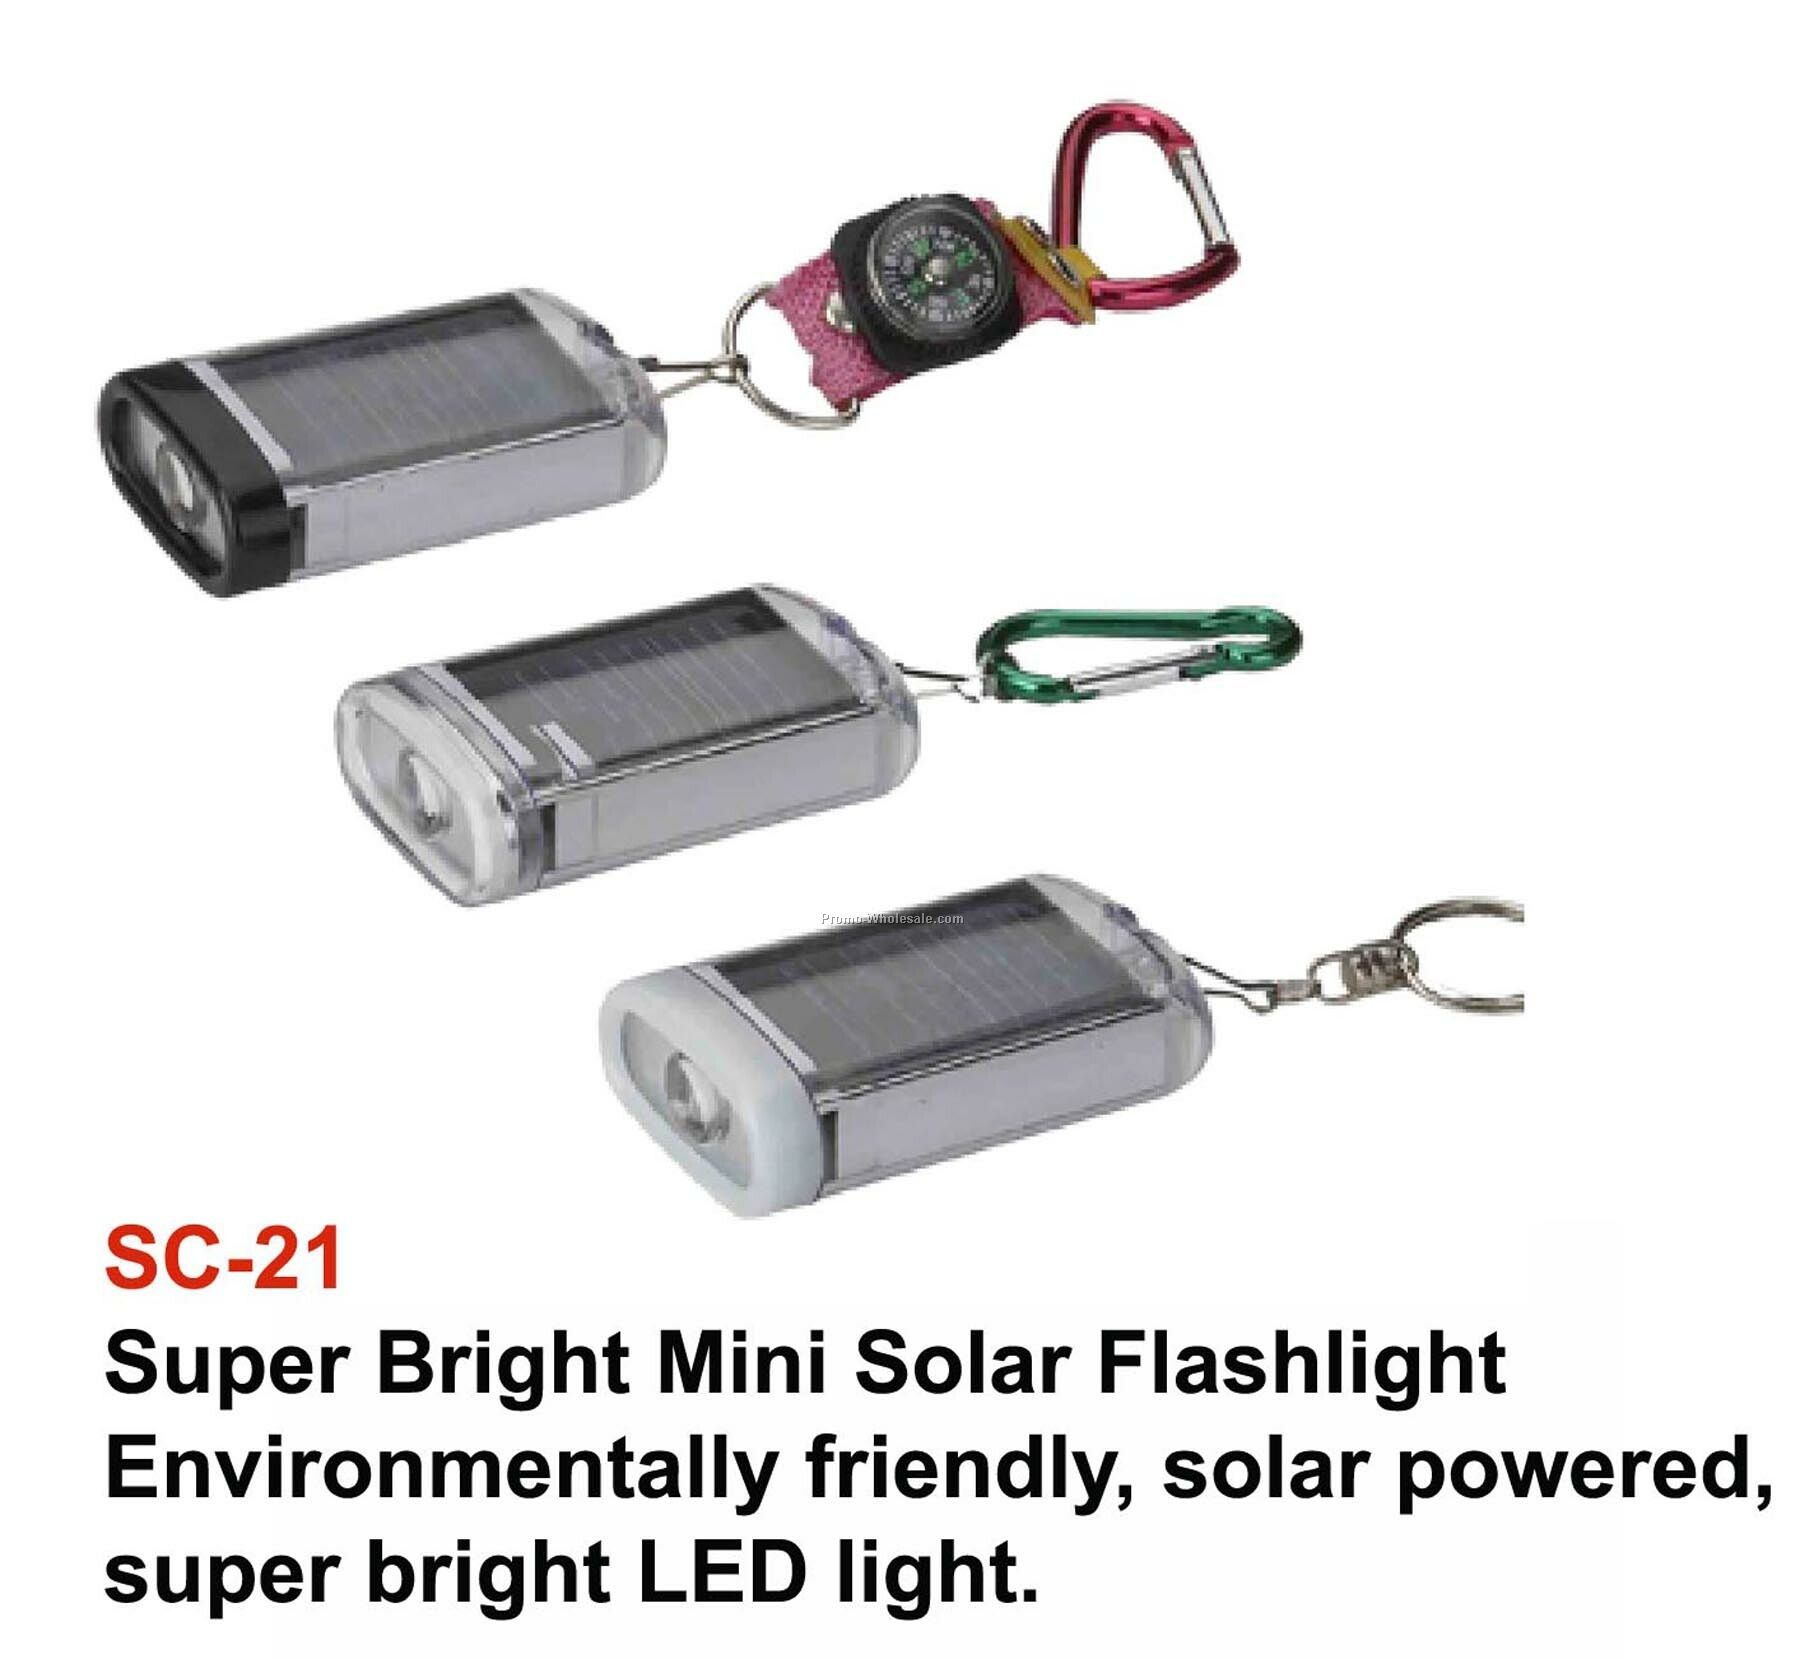 Solar Mini, Miniature, LED Light, Compact, Clip